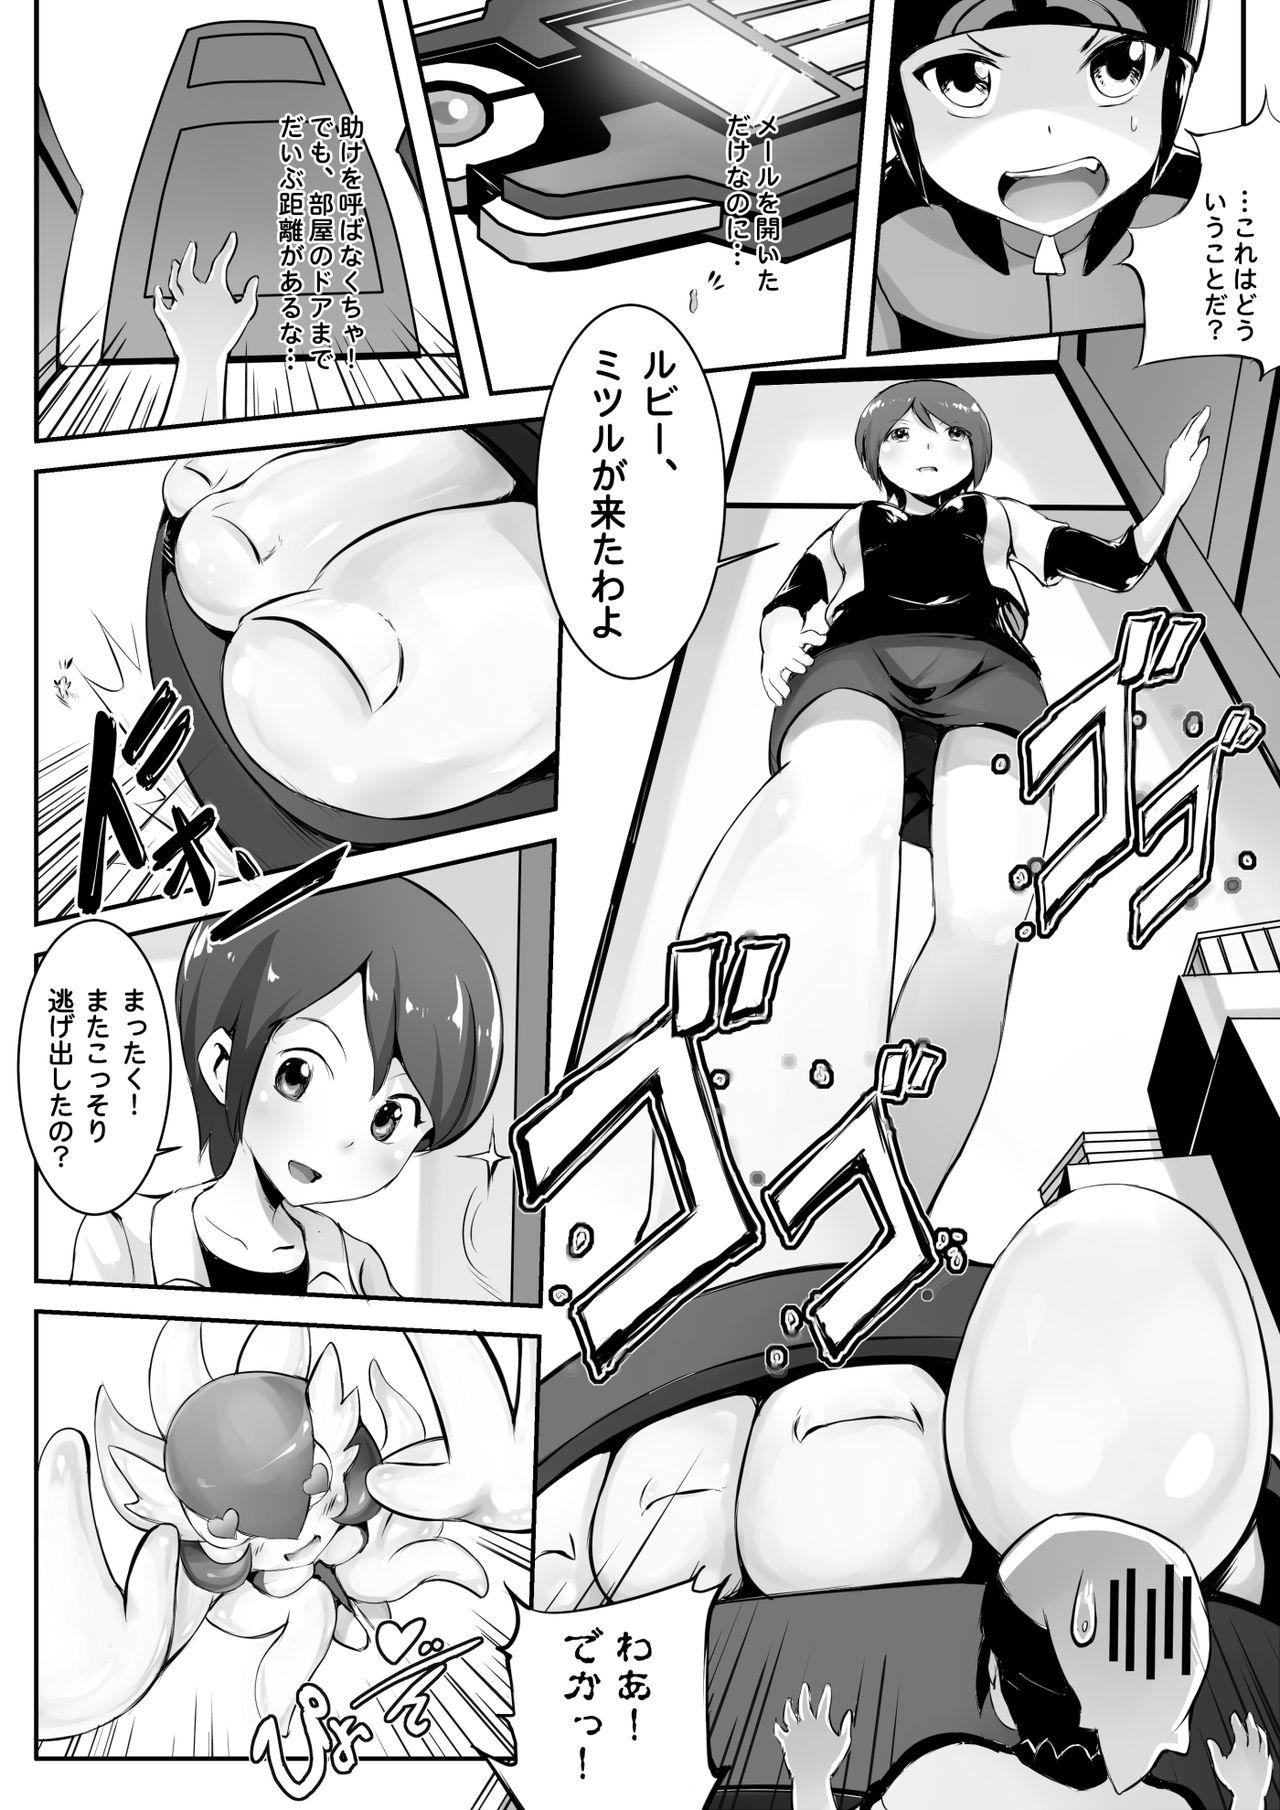 Asshole Pokemon GS/ BEGIN - Pokemon Erotica - Page 2